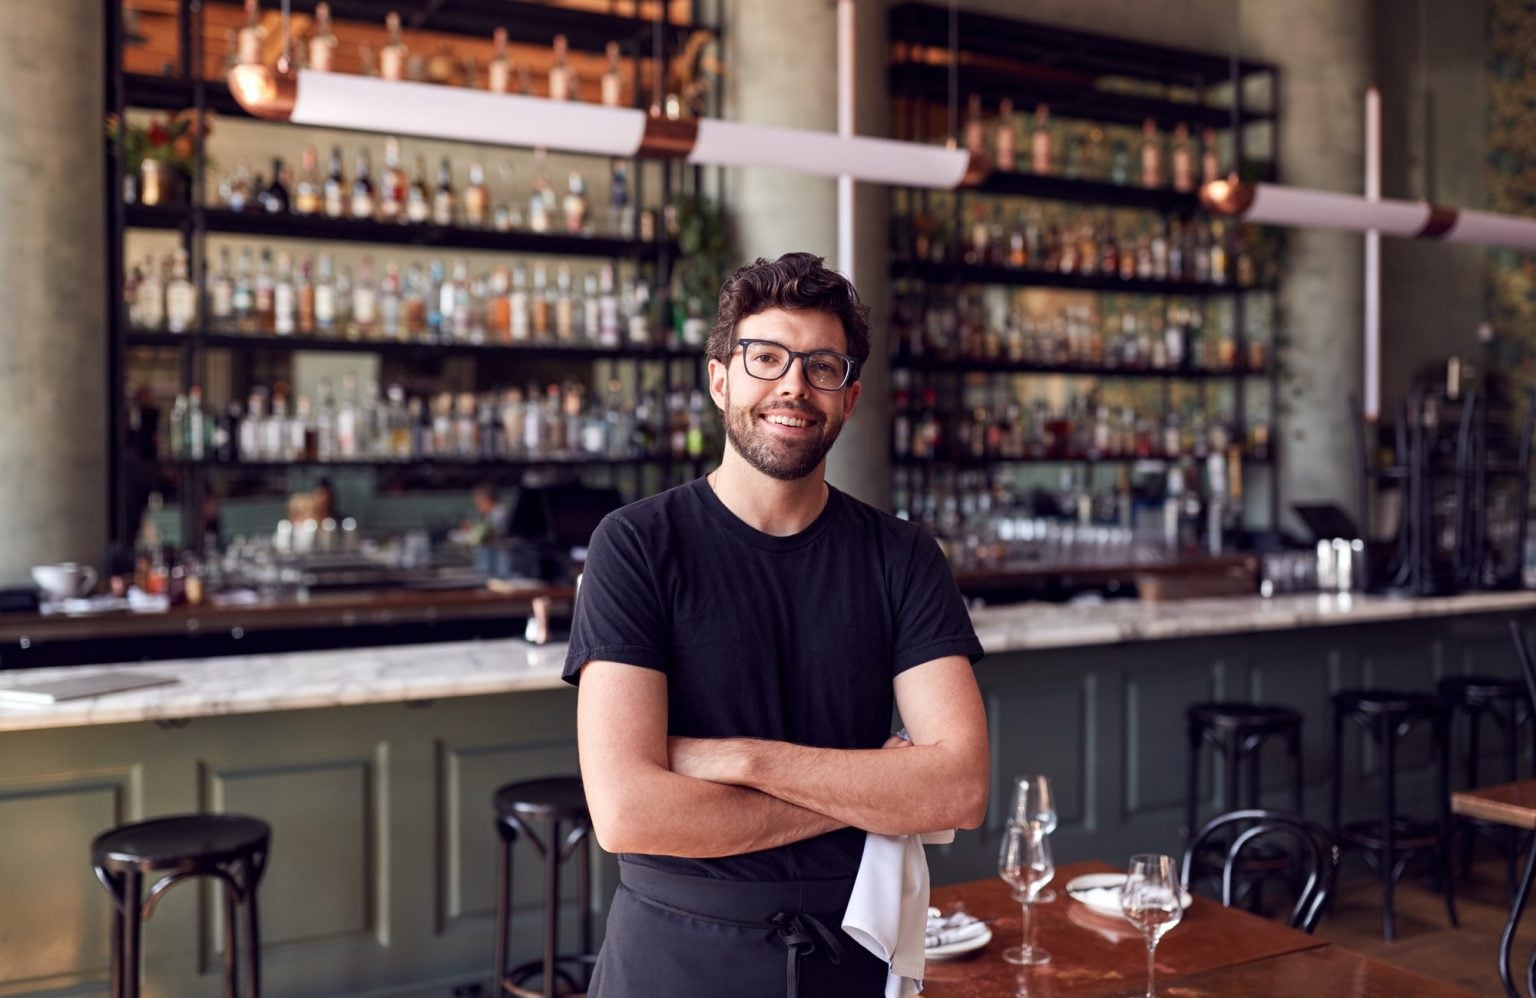 Portrait Of Male Waiter Standing In Bar Restaurant Before Service